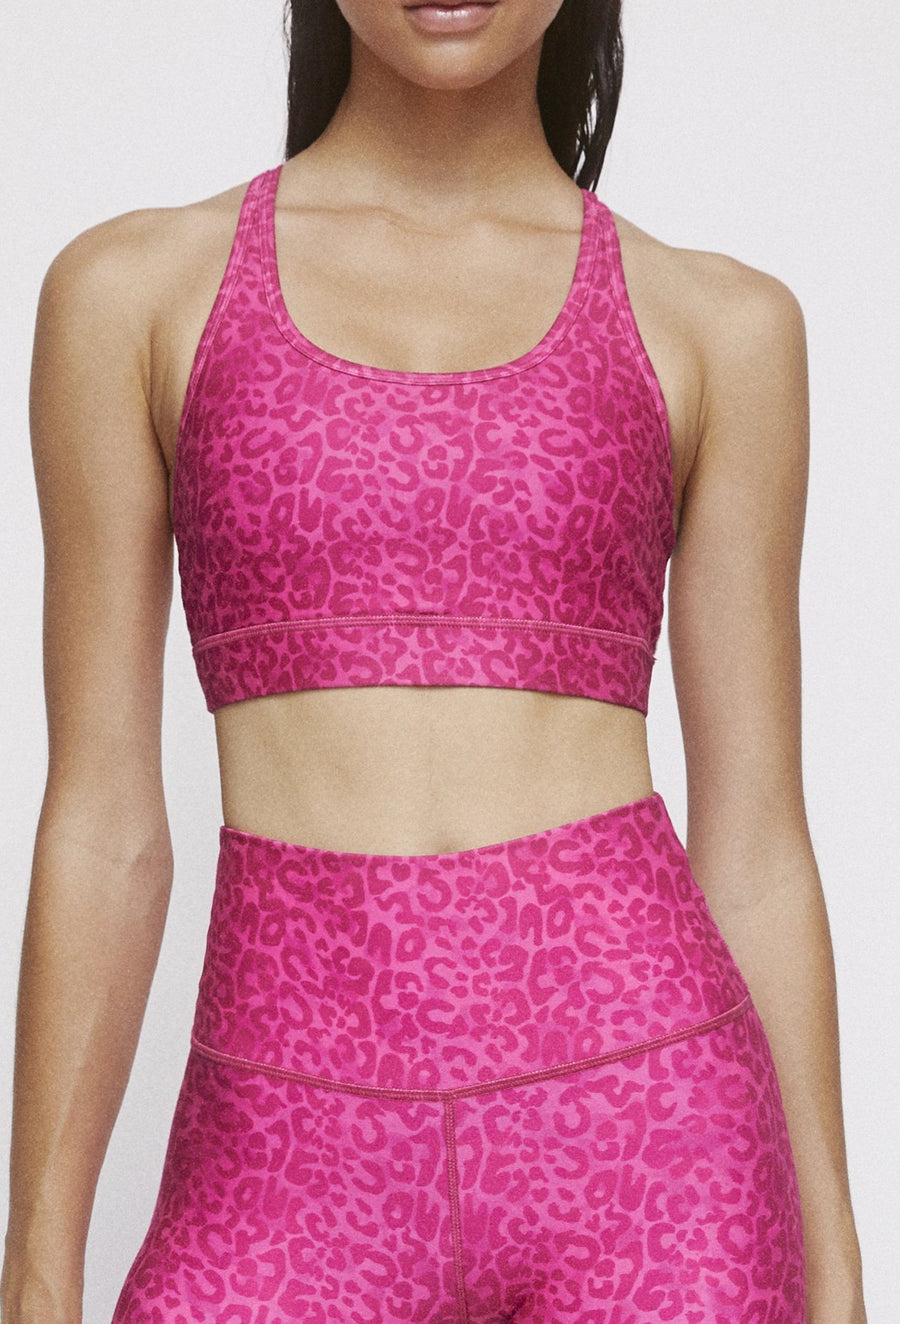 Strappy Bra Neon Pink Cheetah SHIRT W.I.T.H.-Wear It To Heart NEON PINK CHEETAH XS 